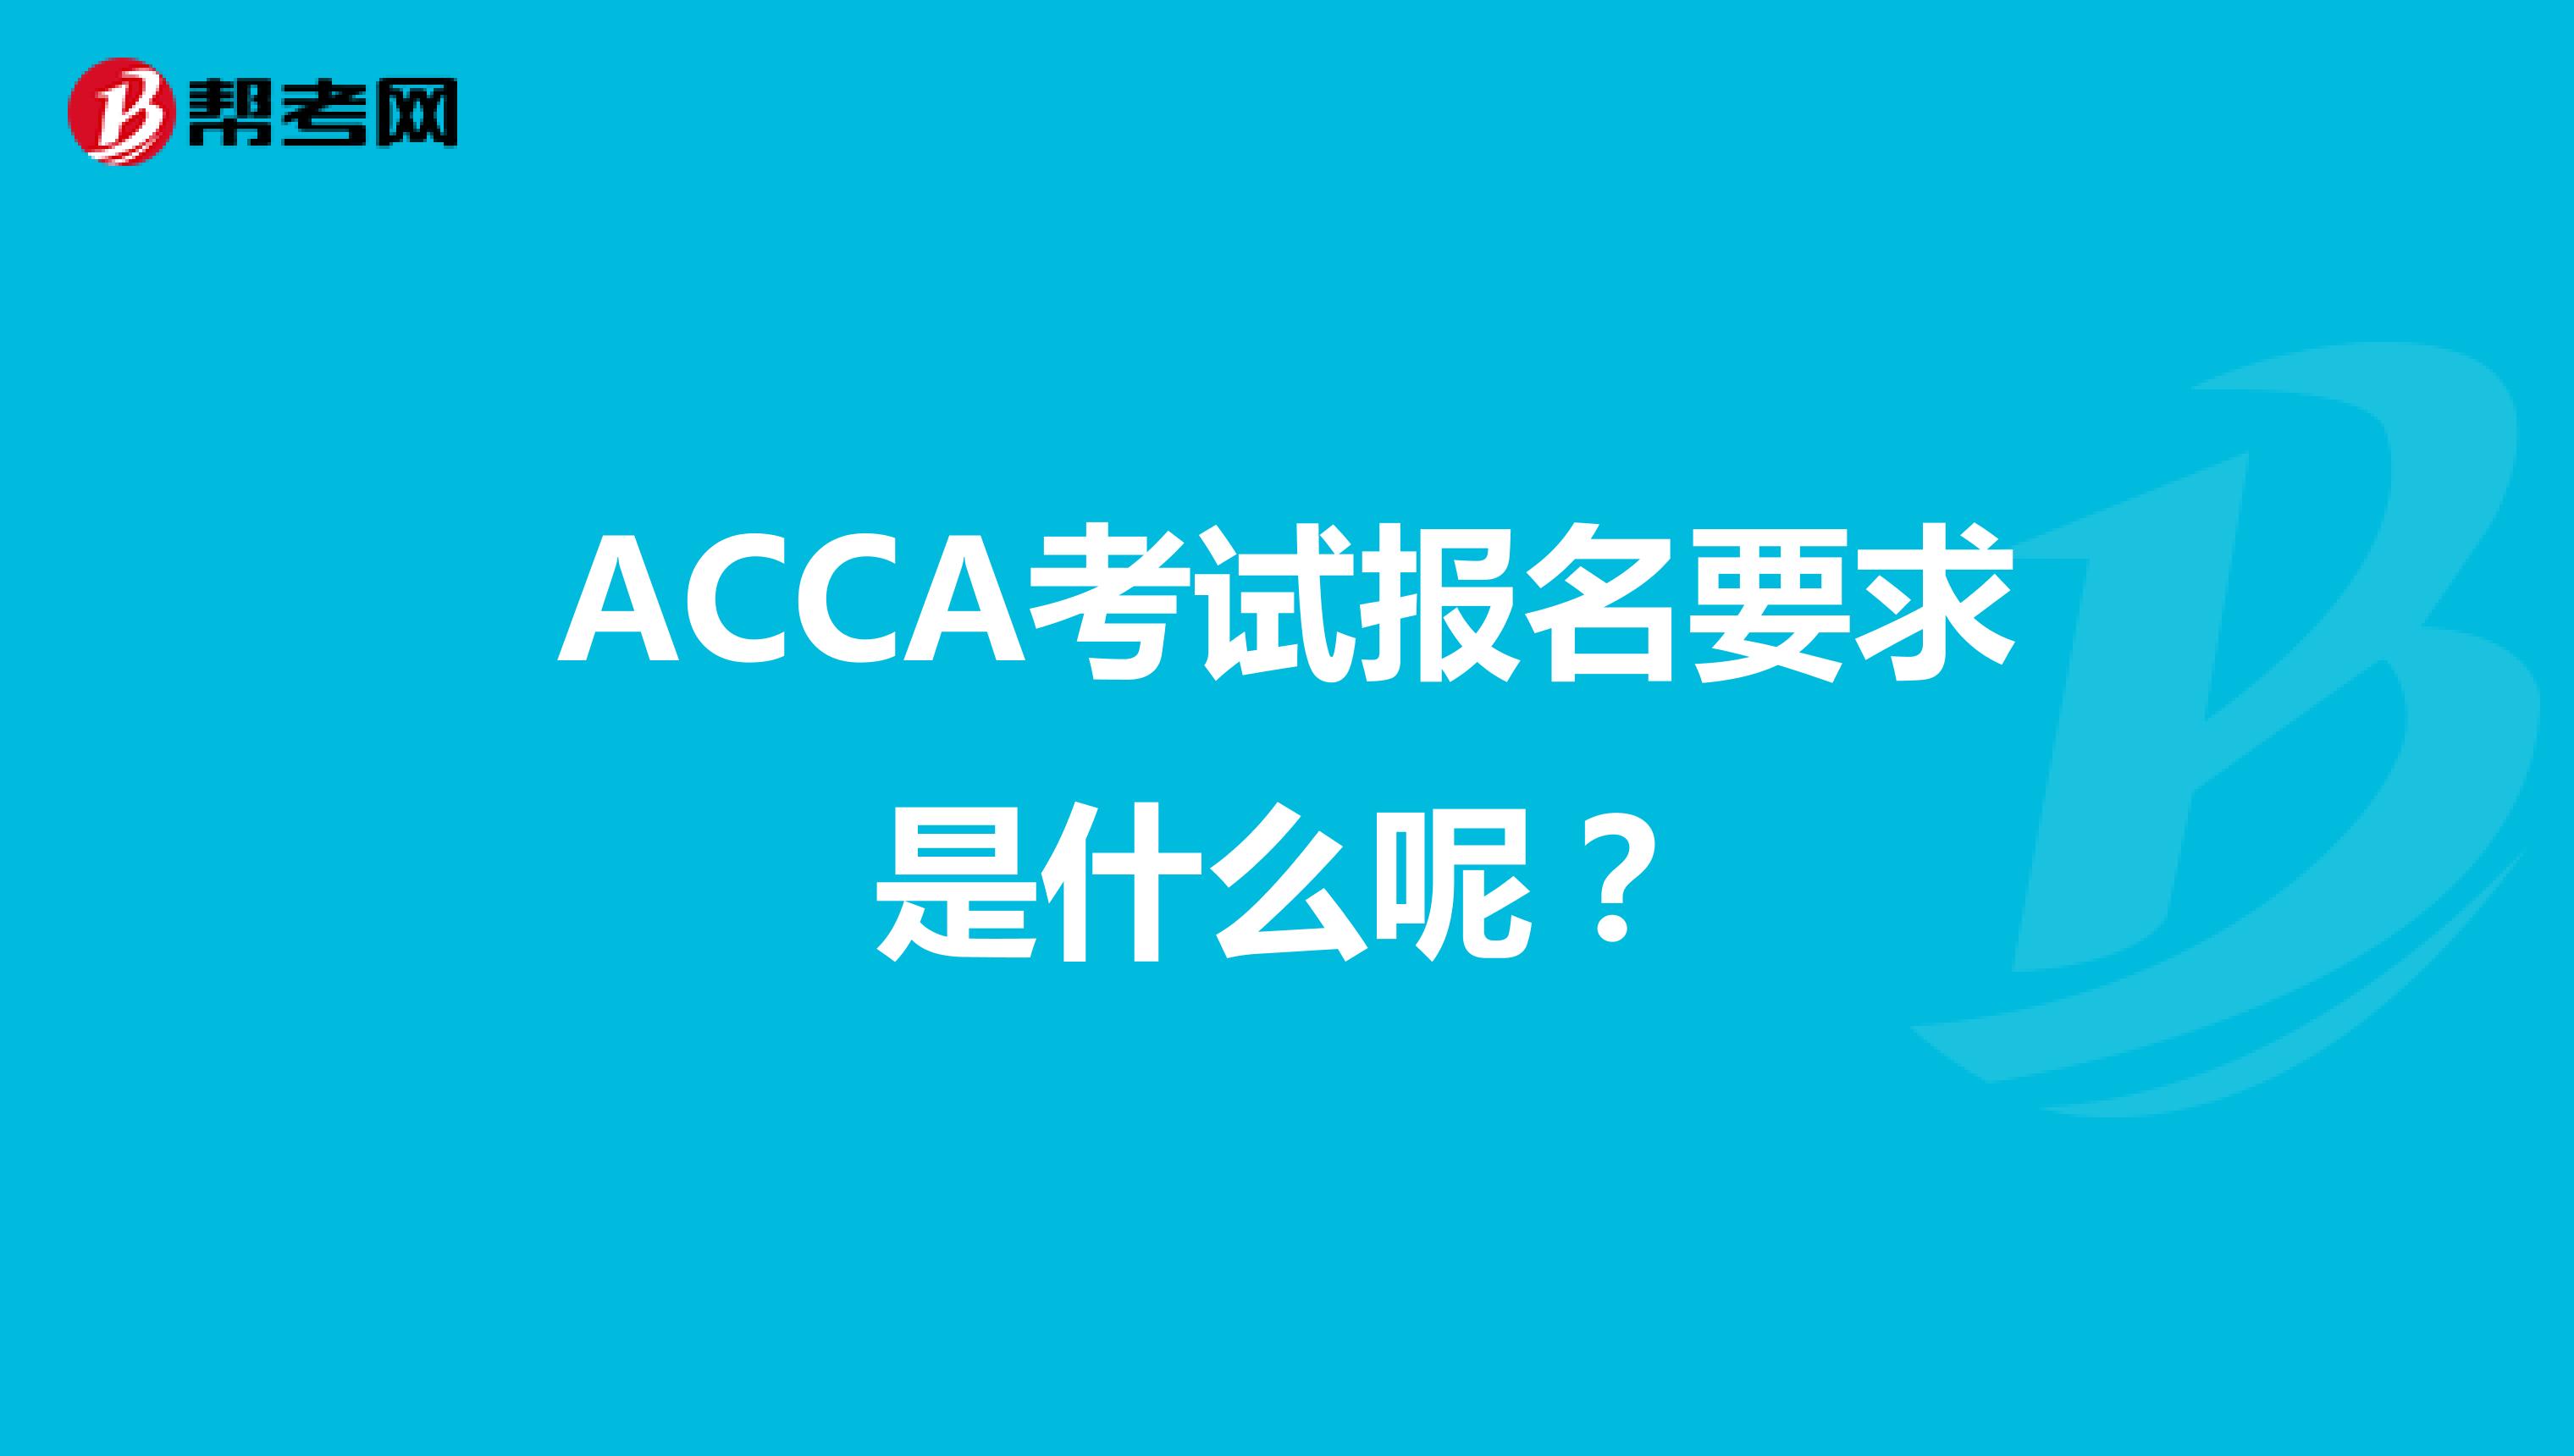 ACCA考试报名要求是什么呢？